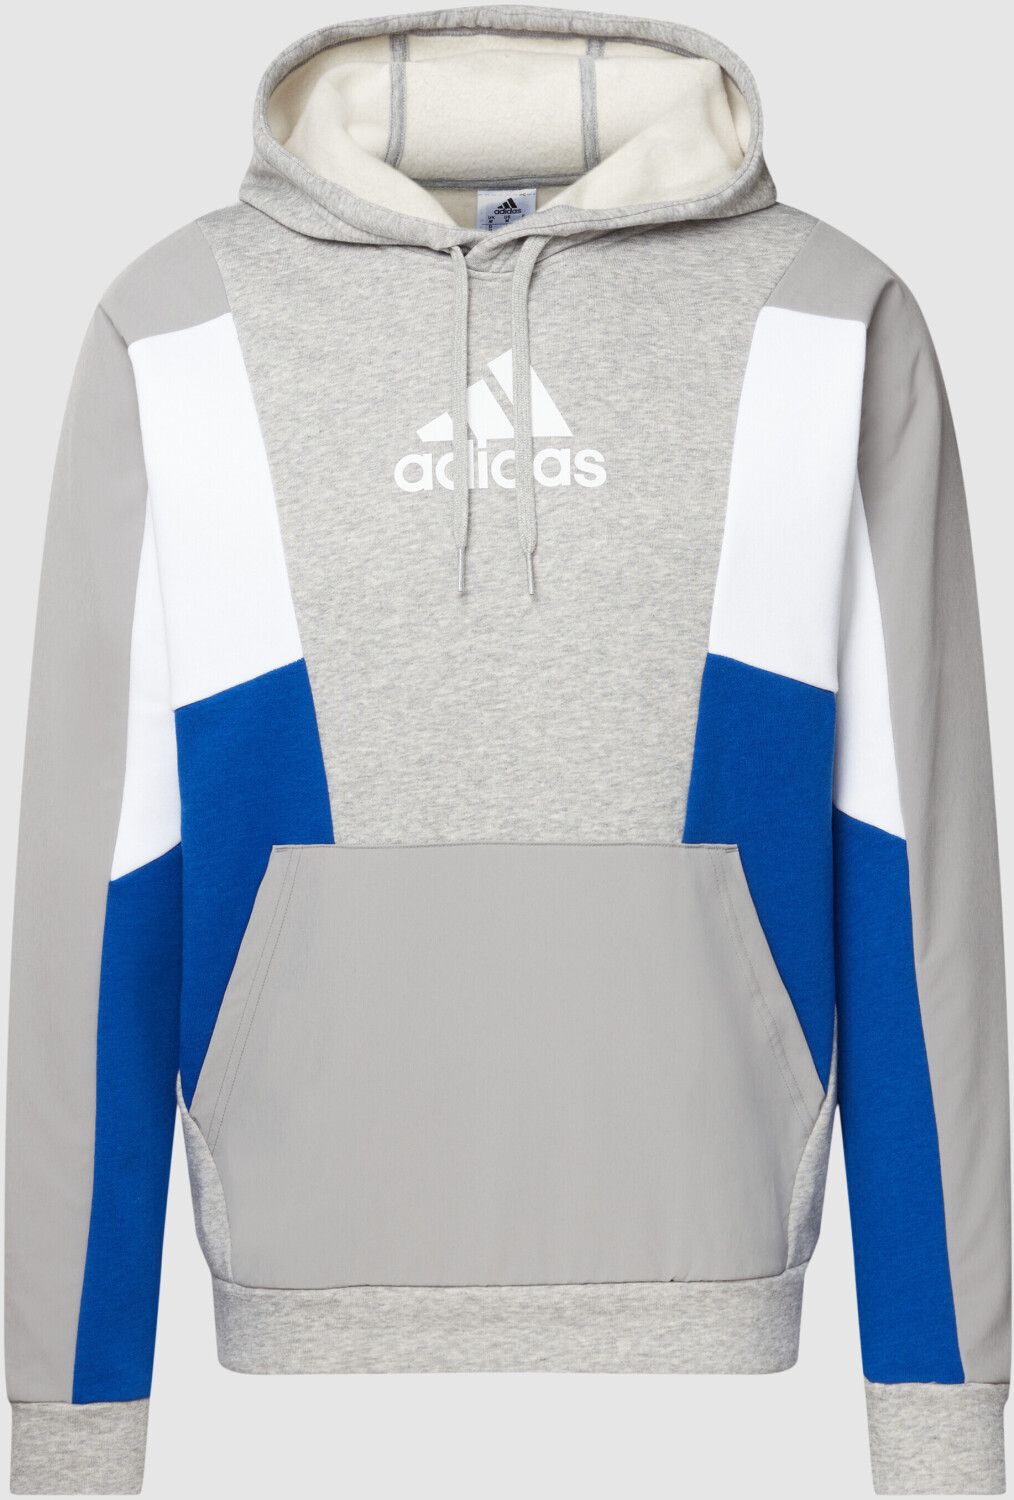 Adidas Essentials Colorblock Hoodie medium grey heather/royal blue ab 34,76  € | Preisvergleich bei